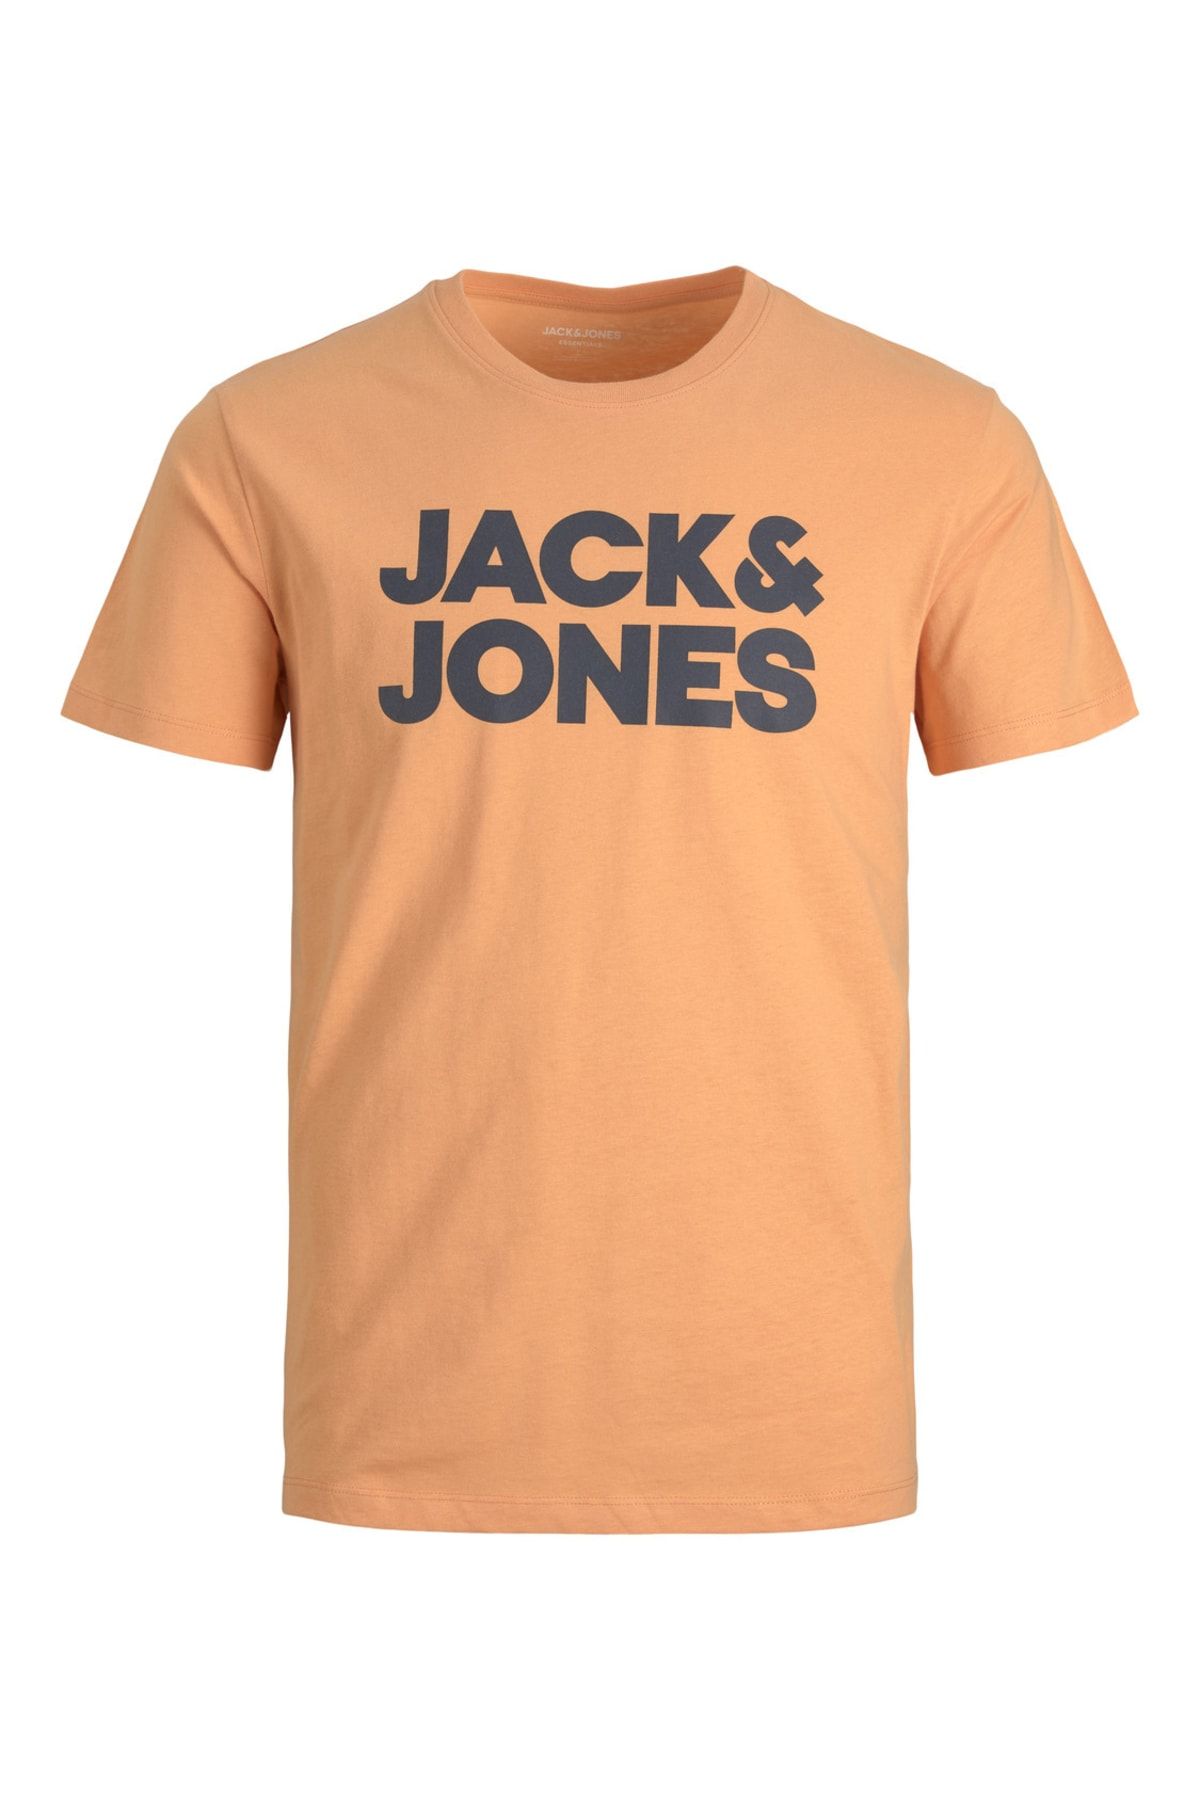 Jack & Jones تی شرت لوگوی یقه خدمه - بچه گانه